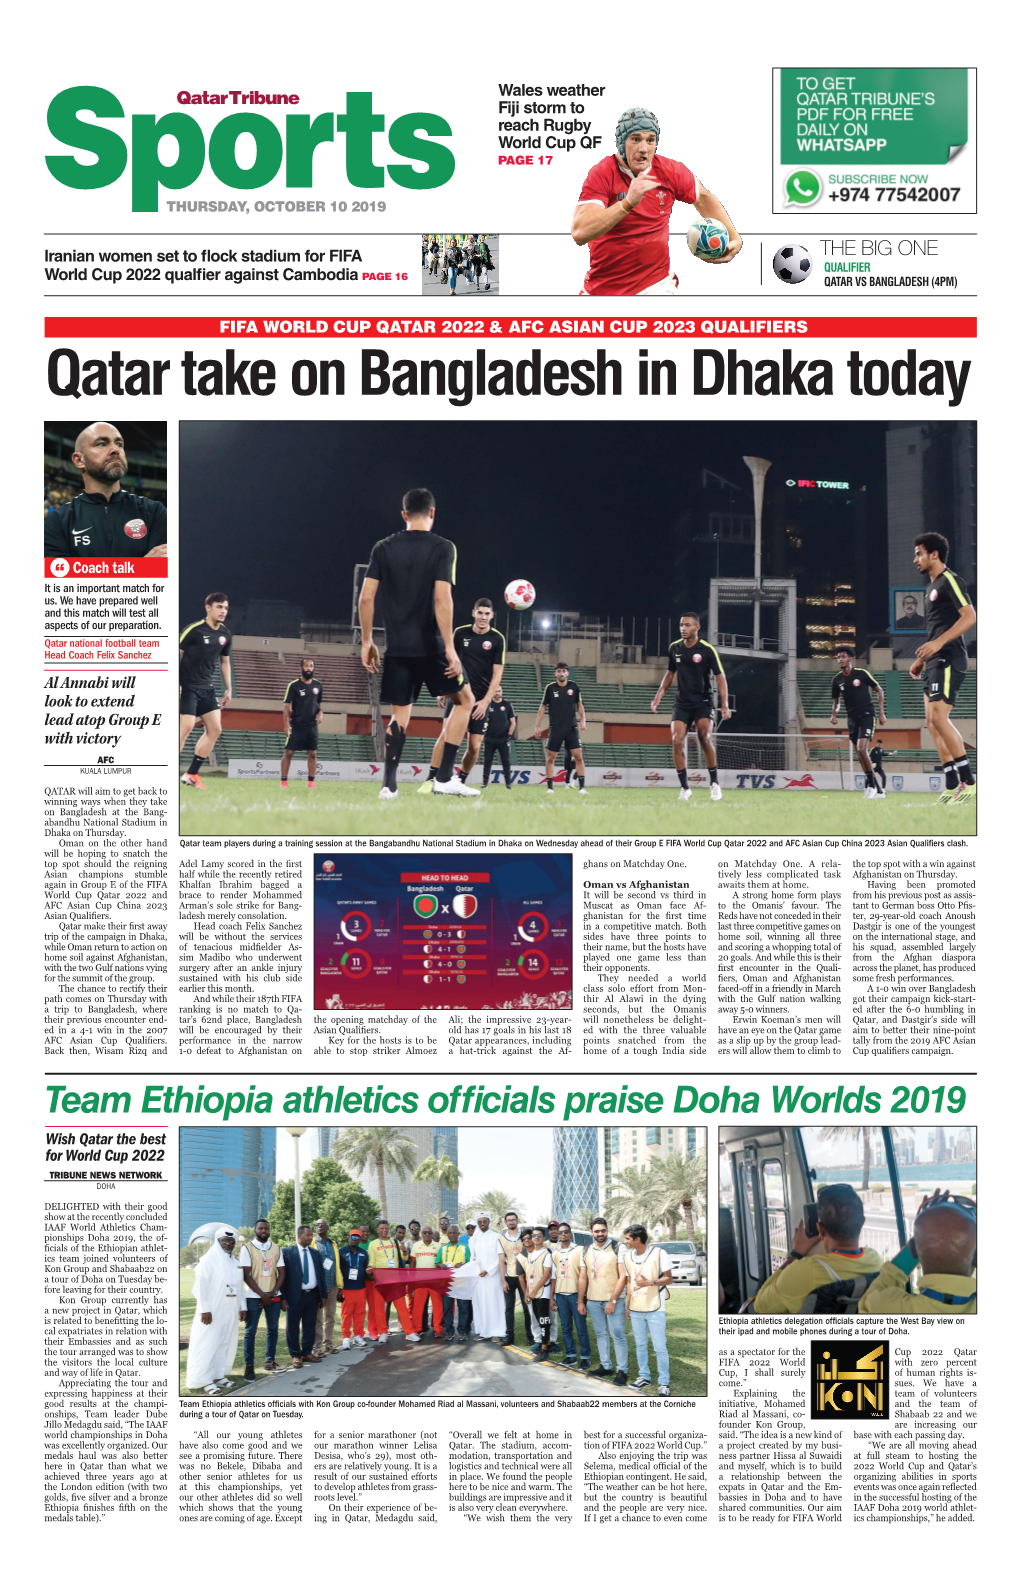 Qatar Take on Bangladesh in Dhaka Today